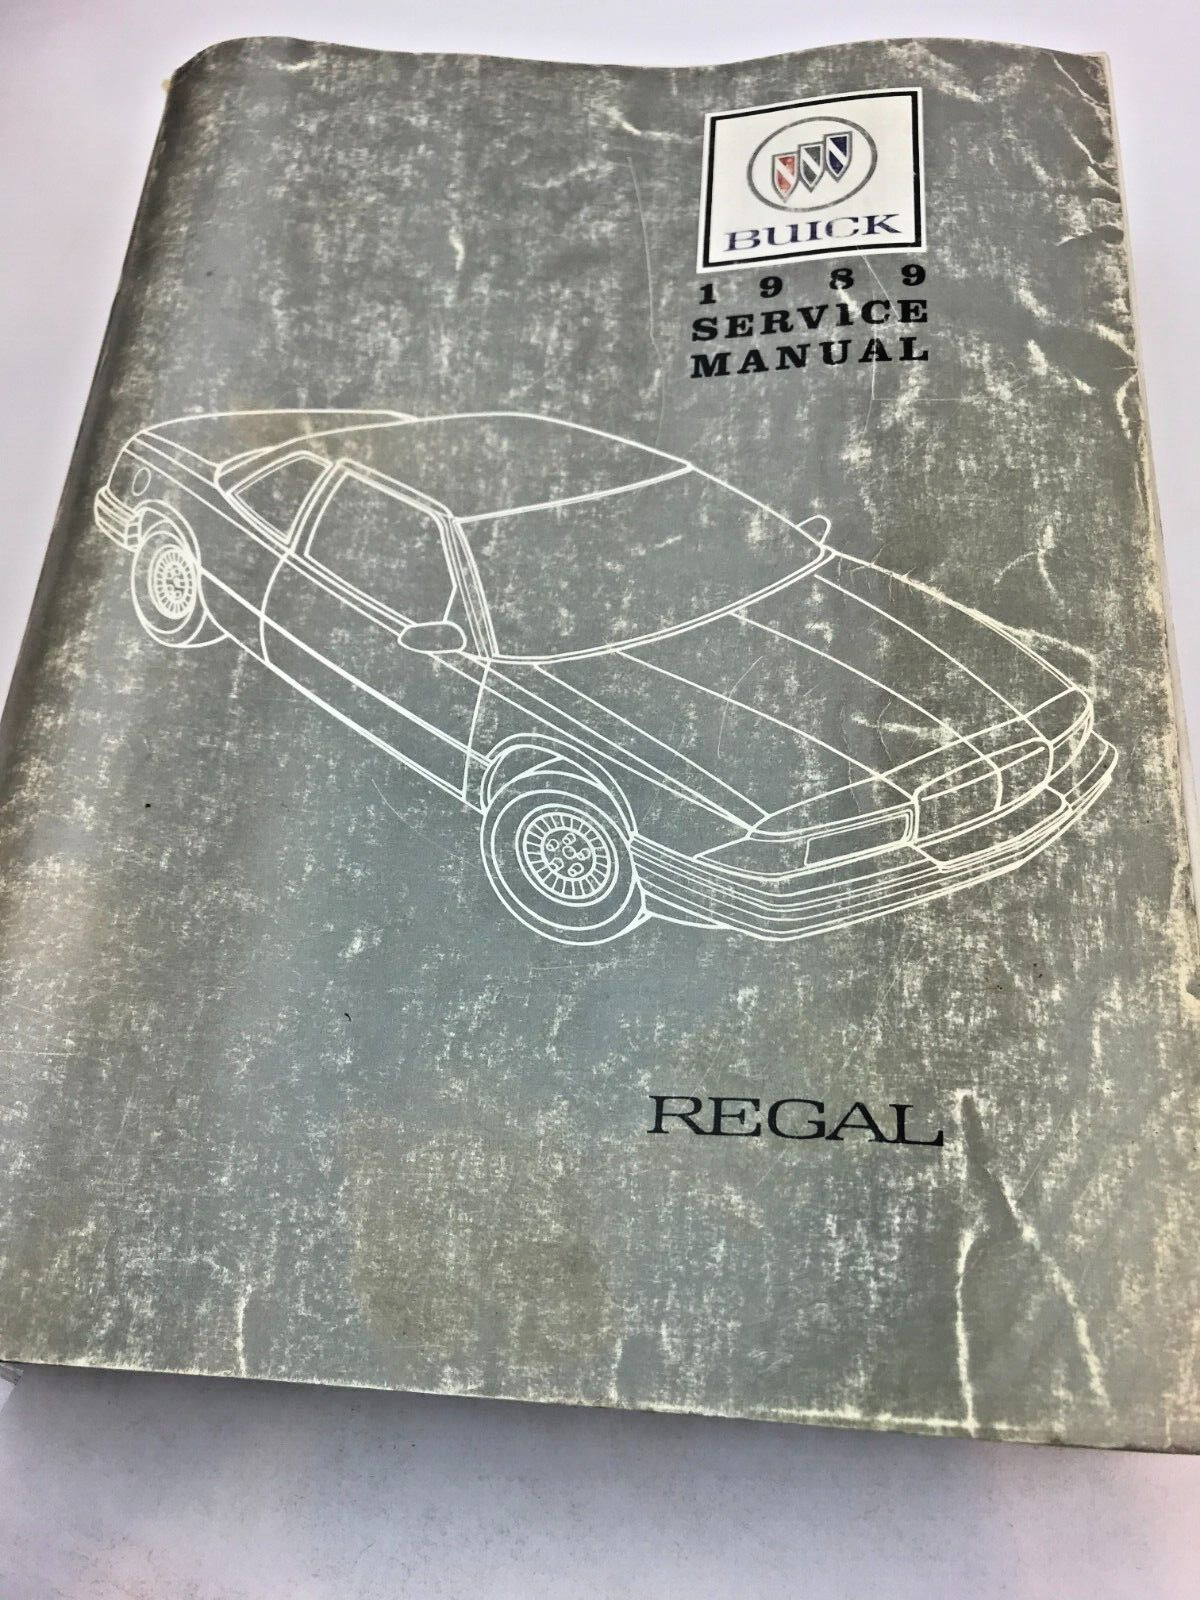 Genuine GM 1989 BUICK REGAL FACTORY SERVICE / SHOP MANUAL